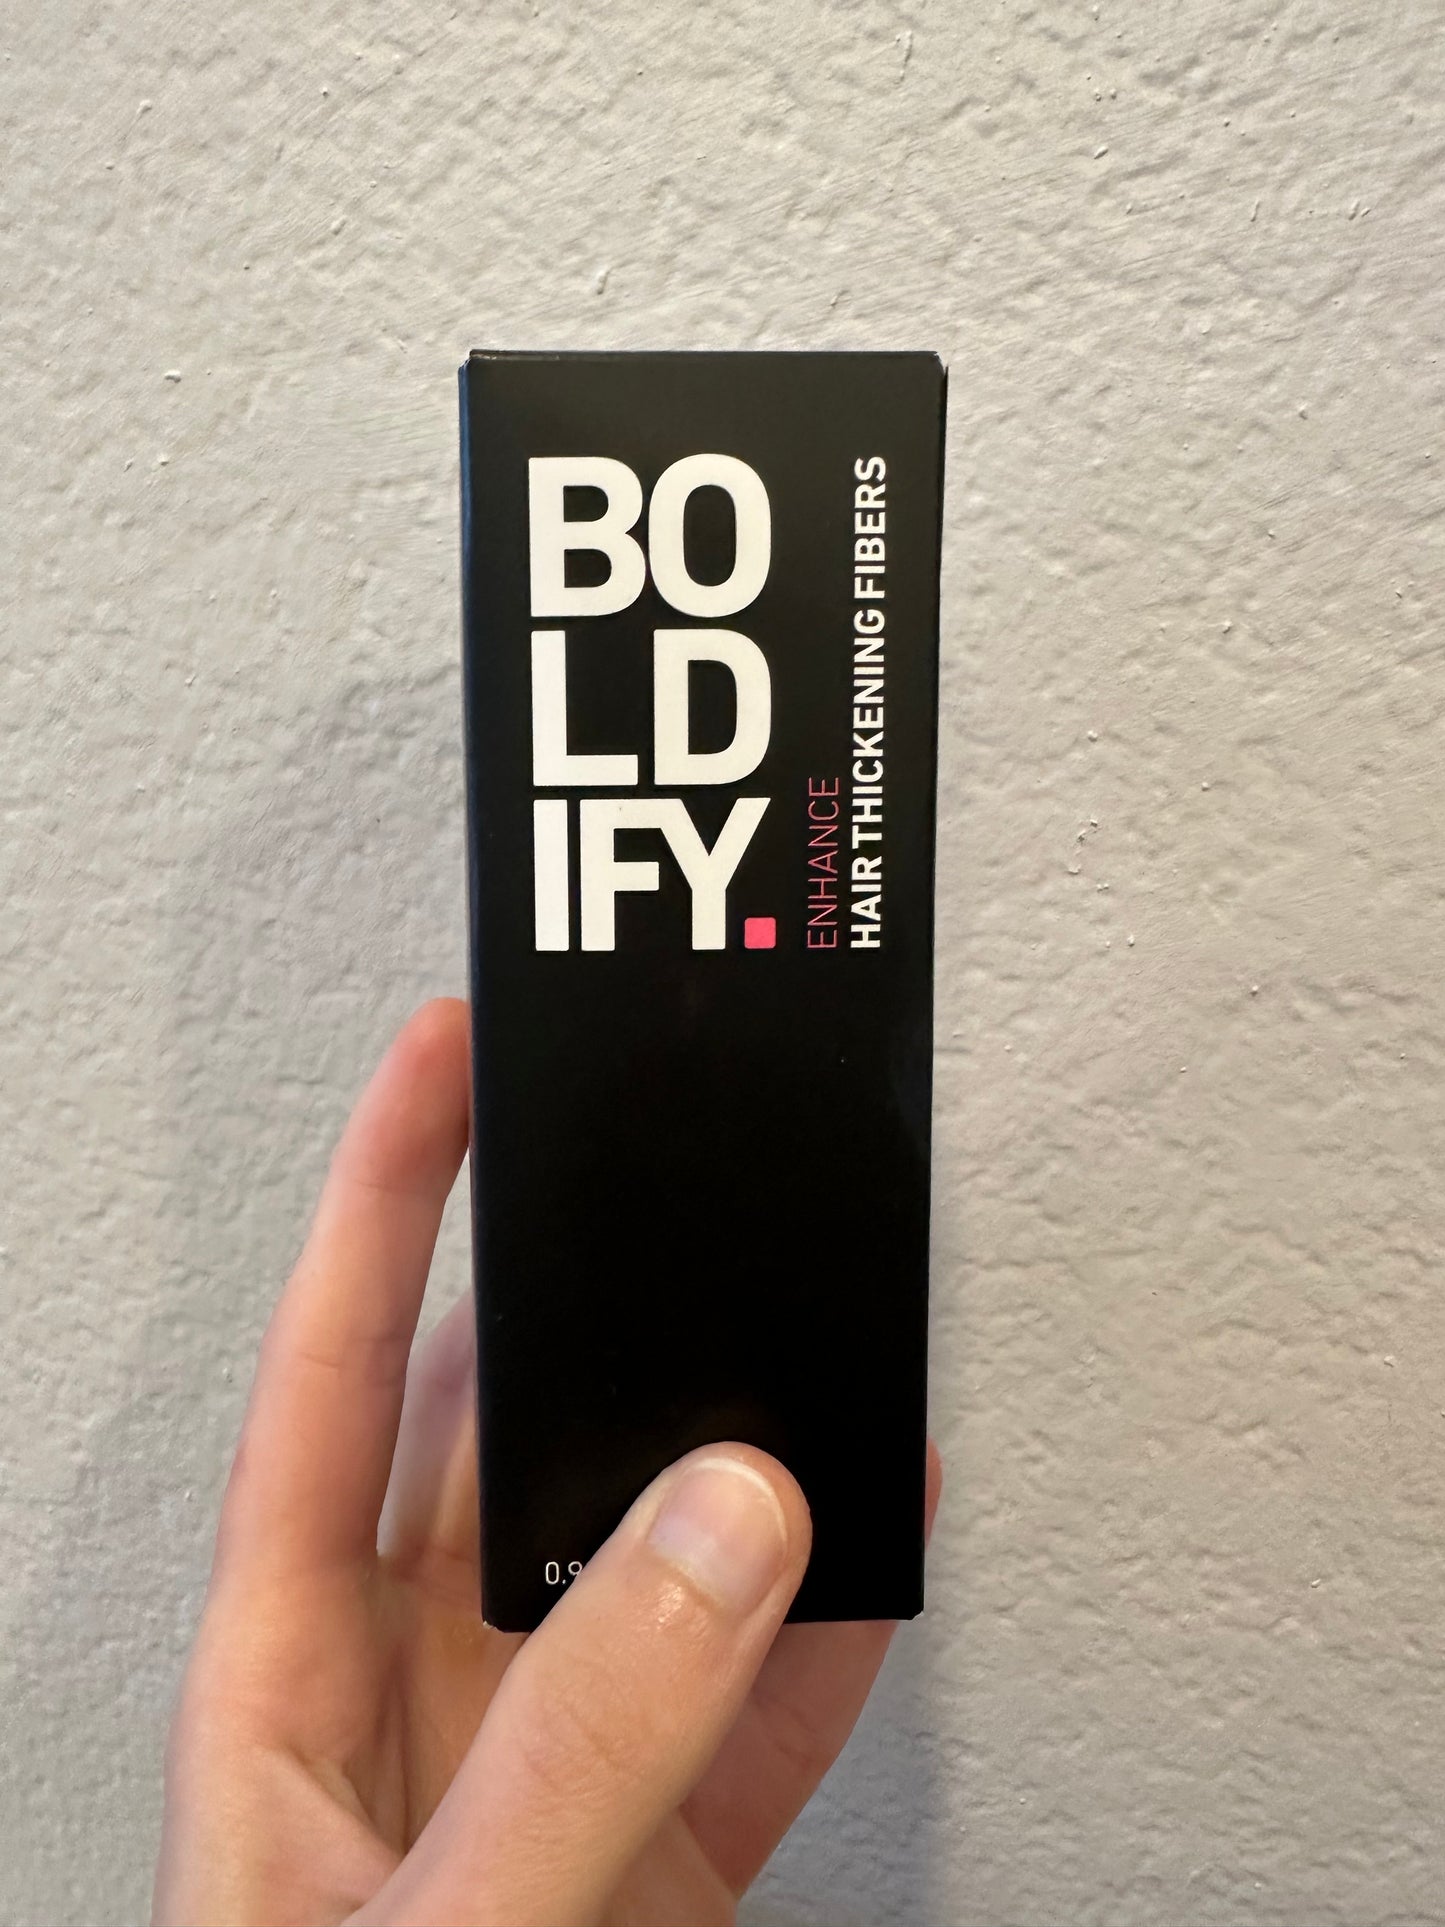 Boldify Enhance Hair Thickening Fibers for Black Hair - NEW